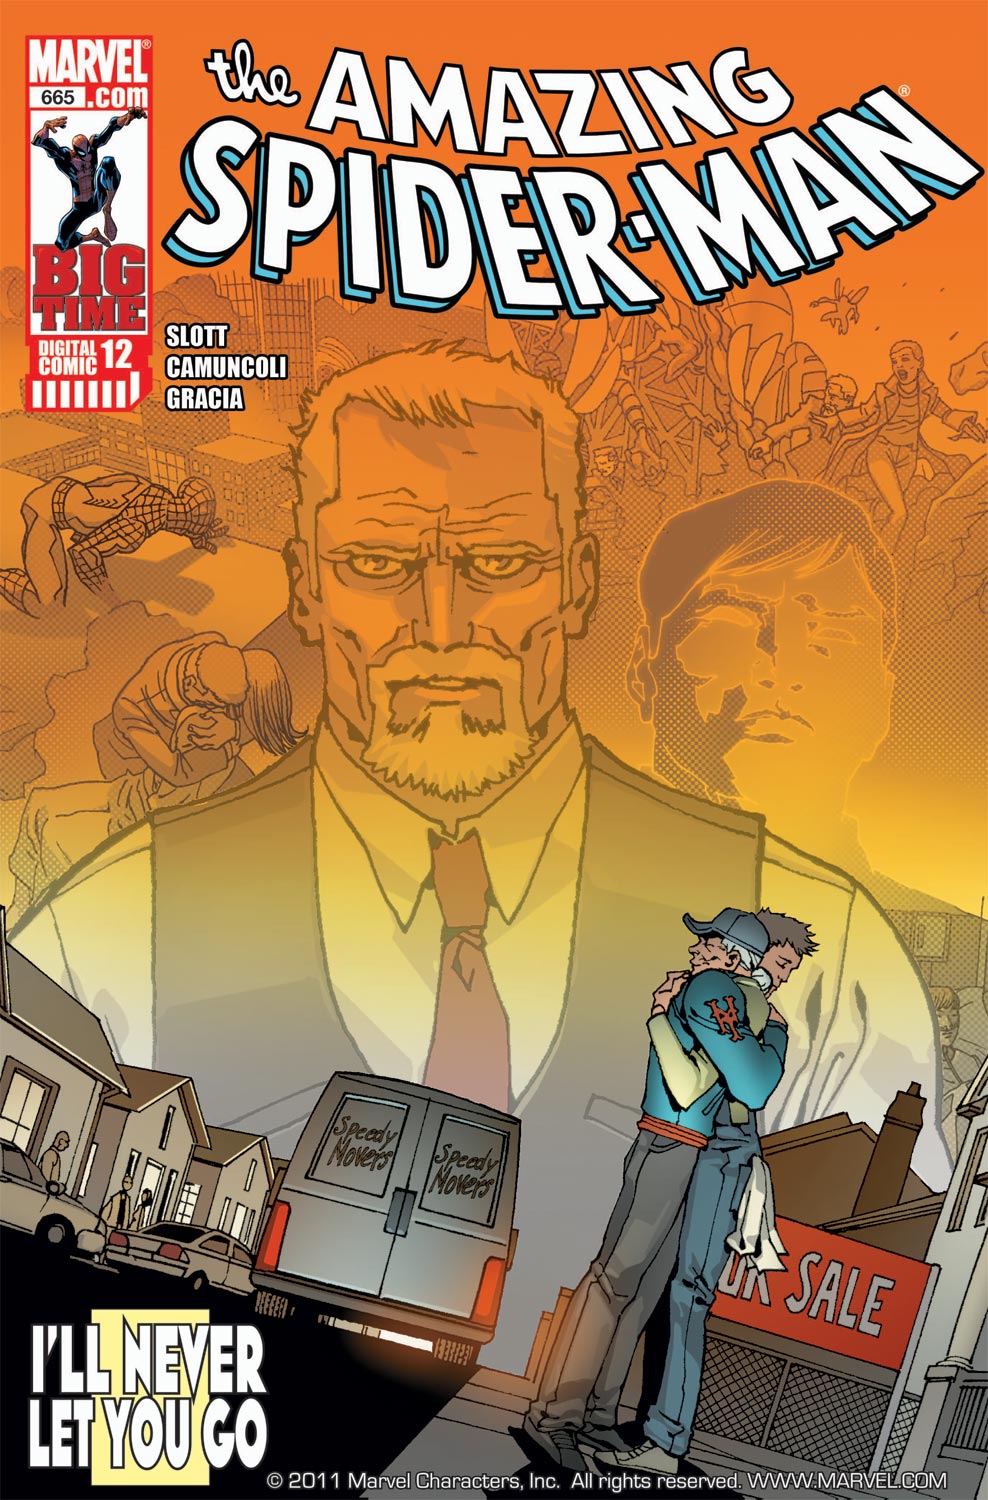 Spider-Man: Big Time Digital Comic (2010) #12